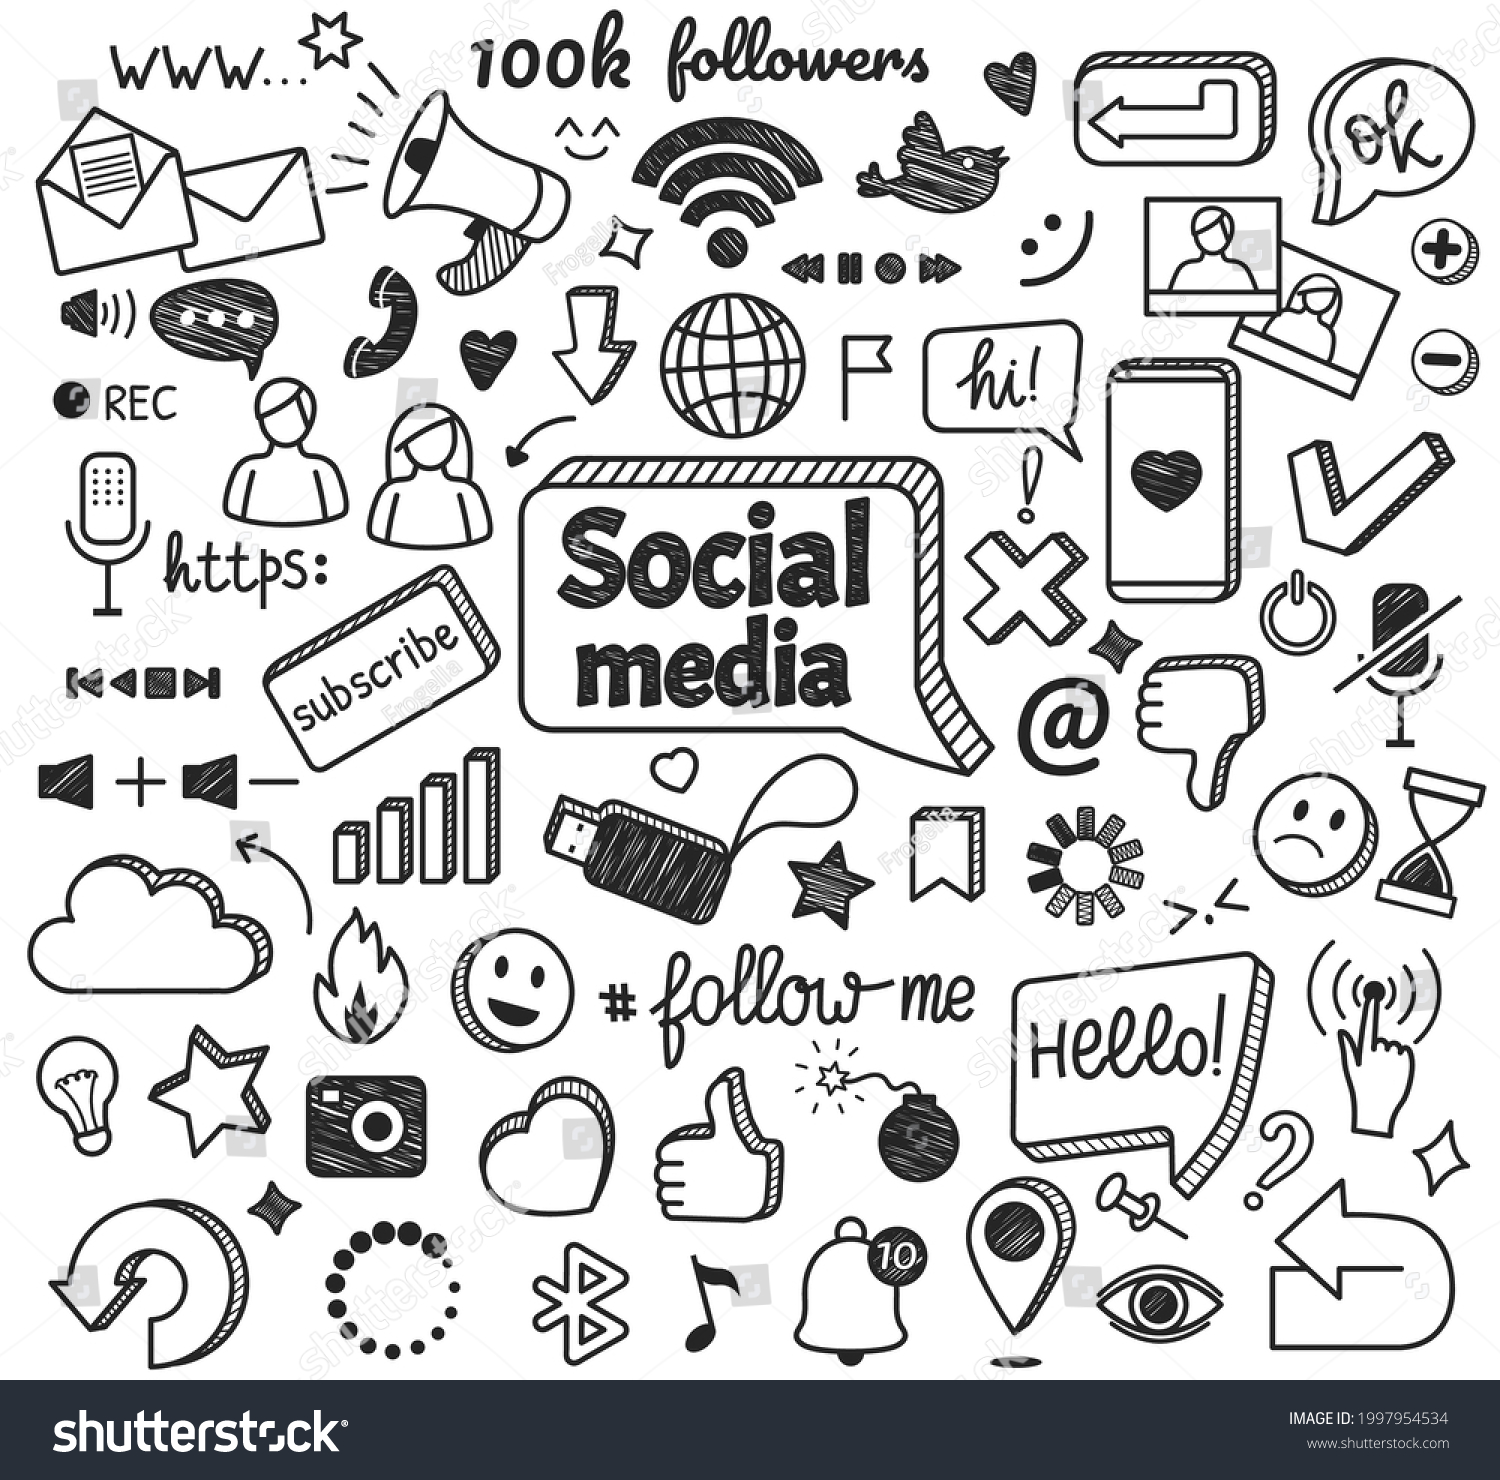 Social media doodles. Hand drawn internet and network sketch symbols. Digital marketing, blogging, online communication doodle sign vector set. Message or chat icons with sta, cloud, smile #1997954534